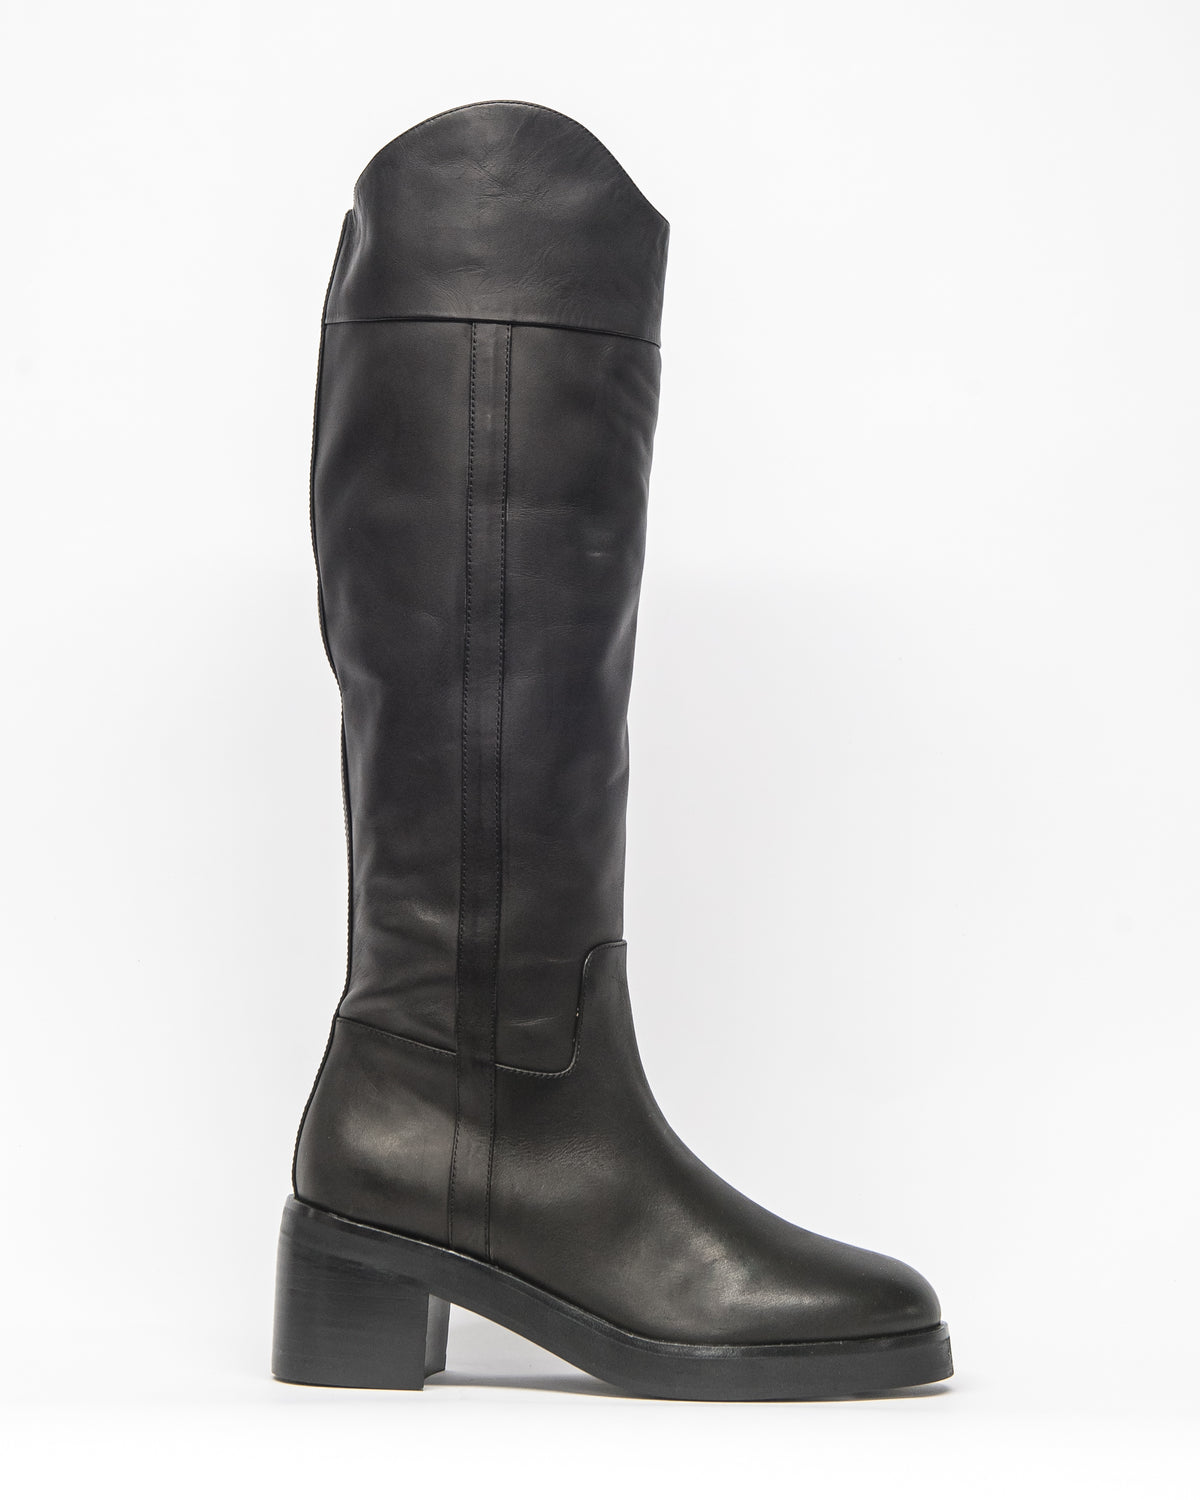 buy baron boot - black leather | zoe kratzmann | zoe kratzmann